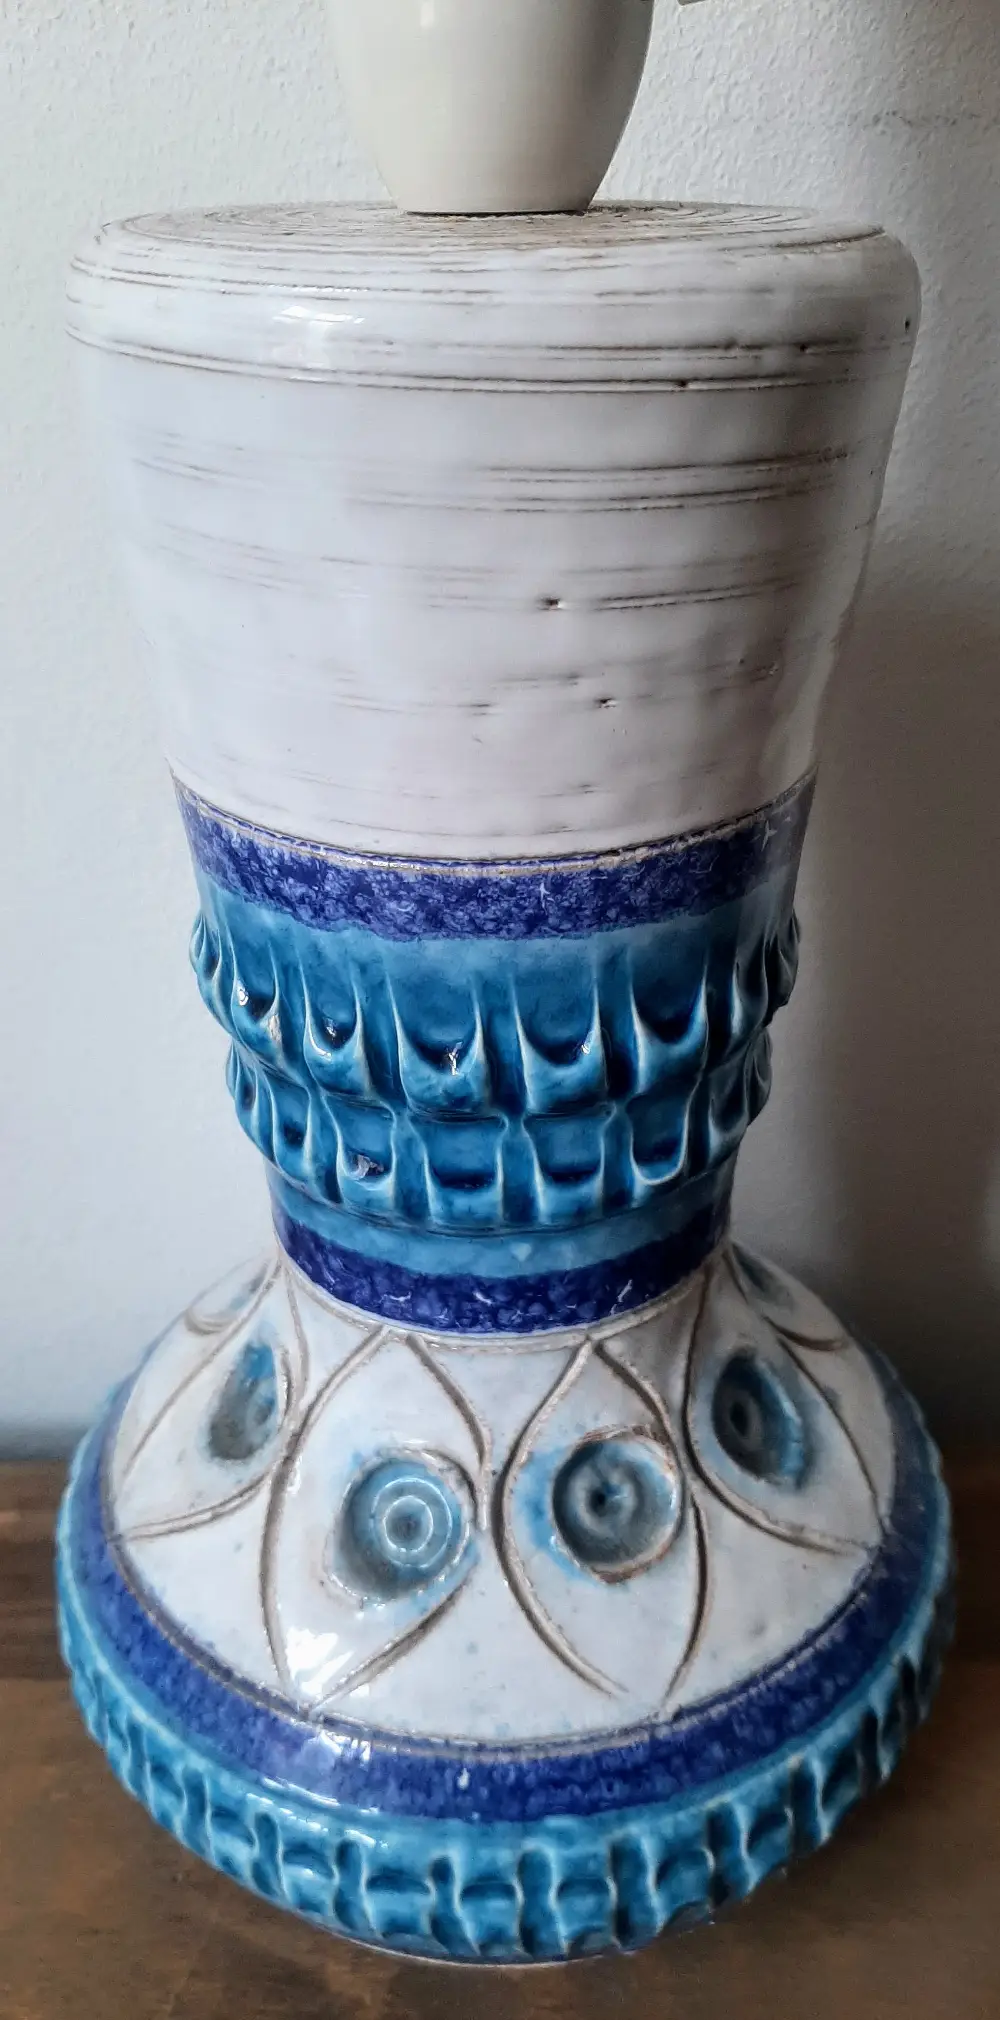 Retro Keramik bordlampe